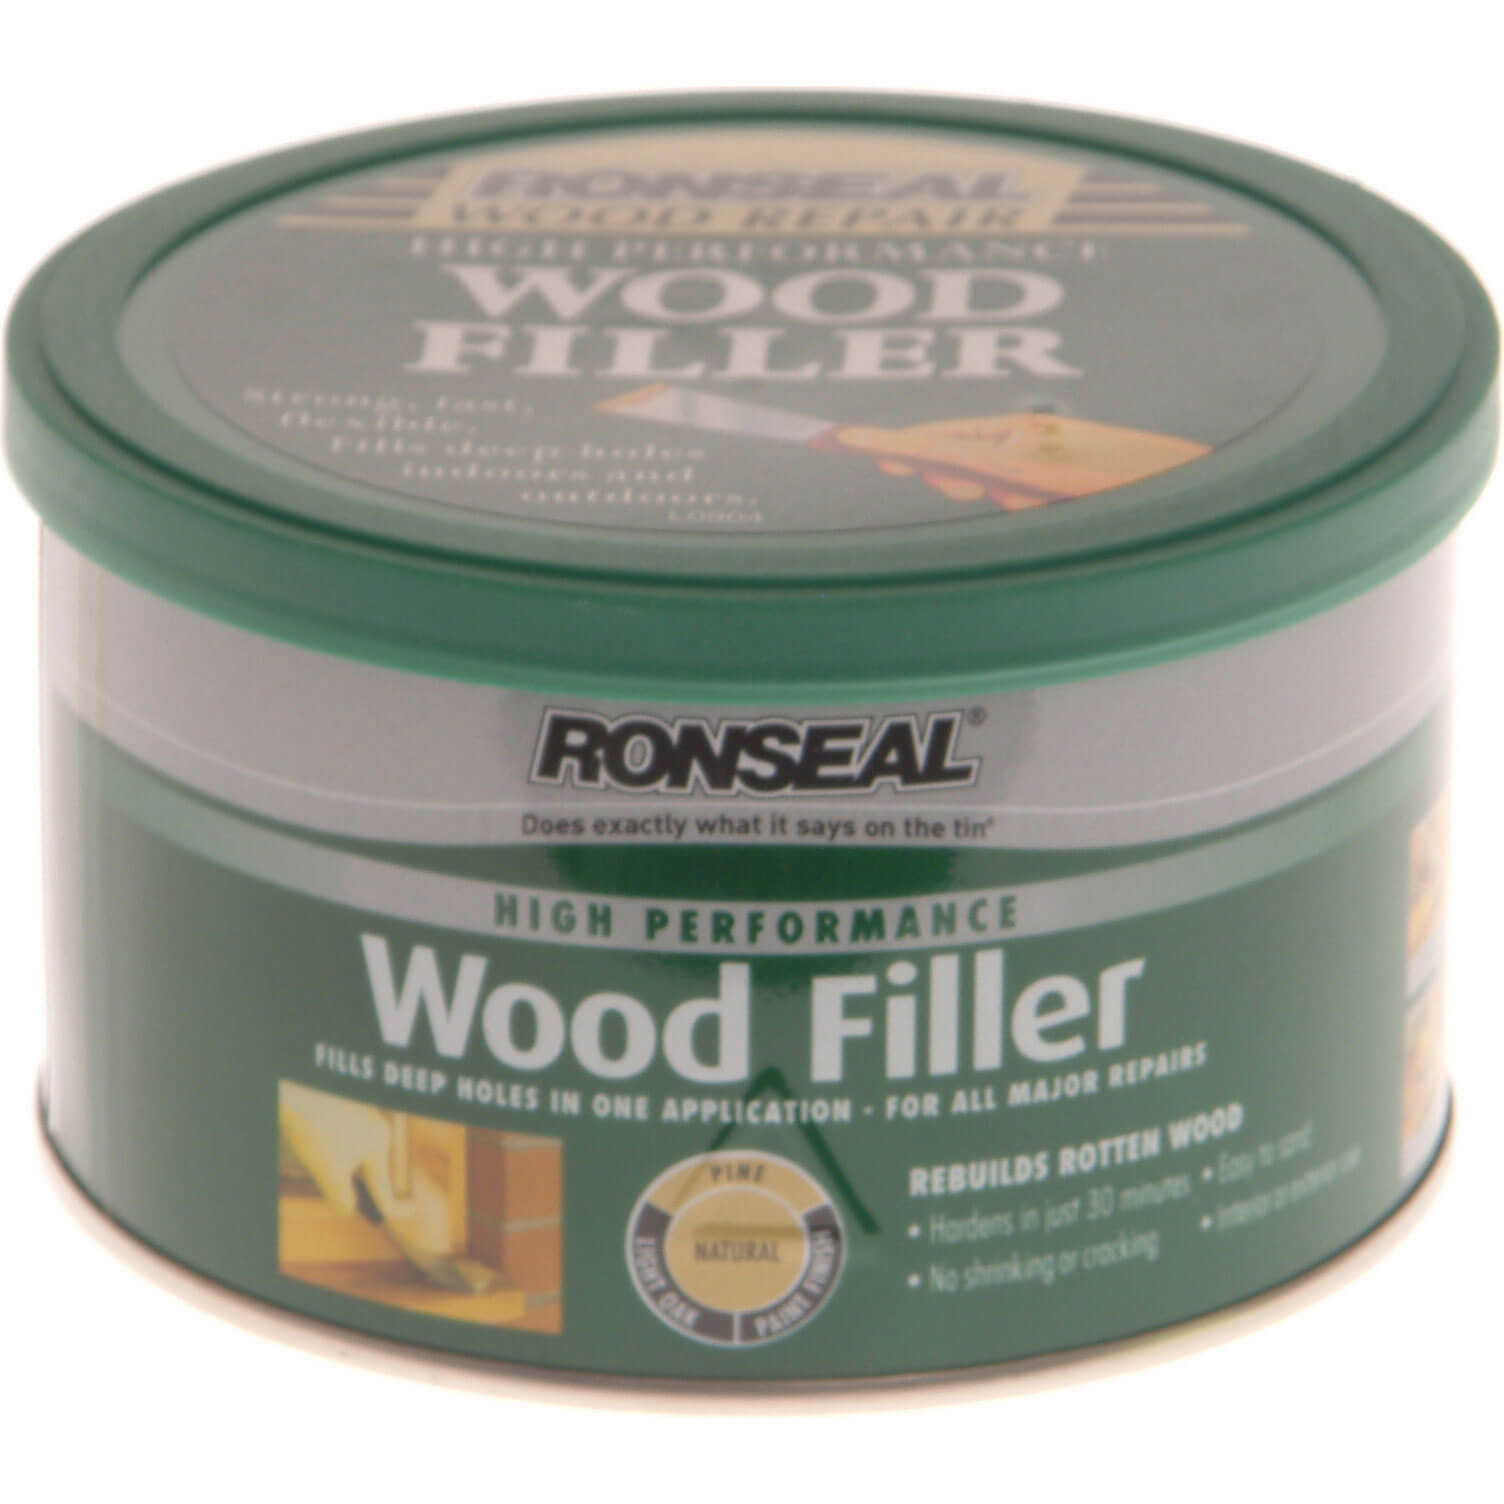 Image of Ronseal High Performance Wood Filler Natural 275g